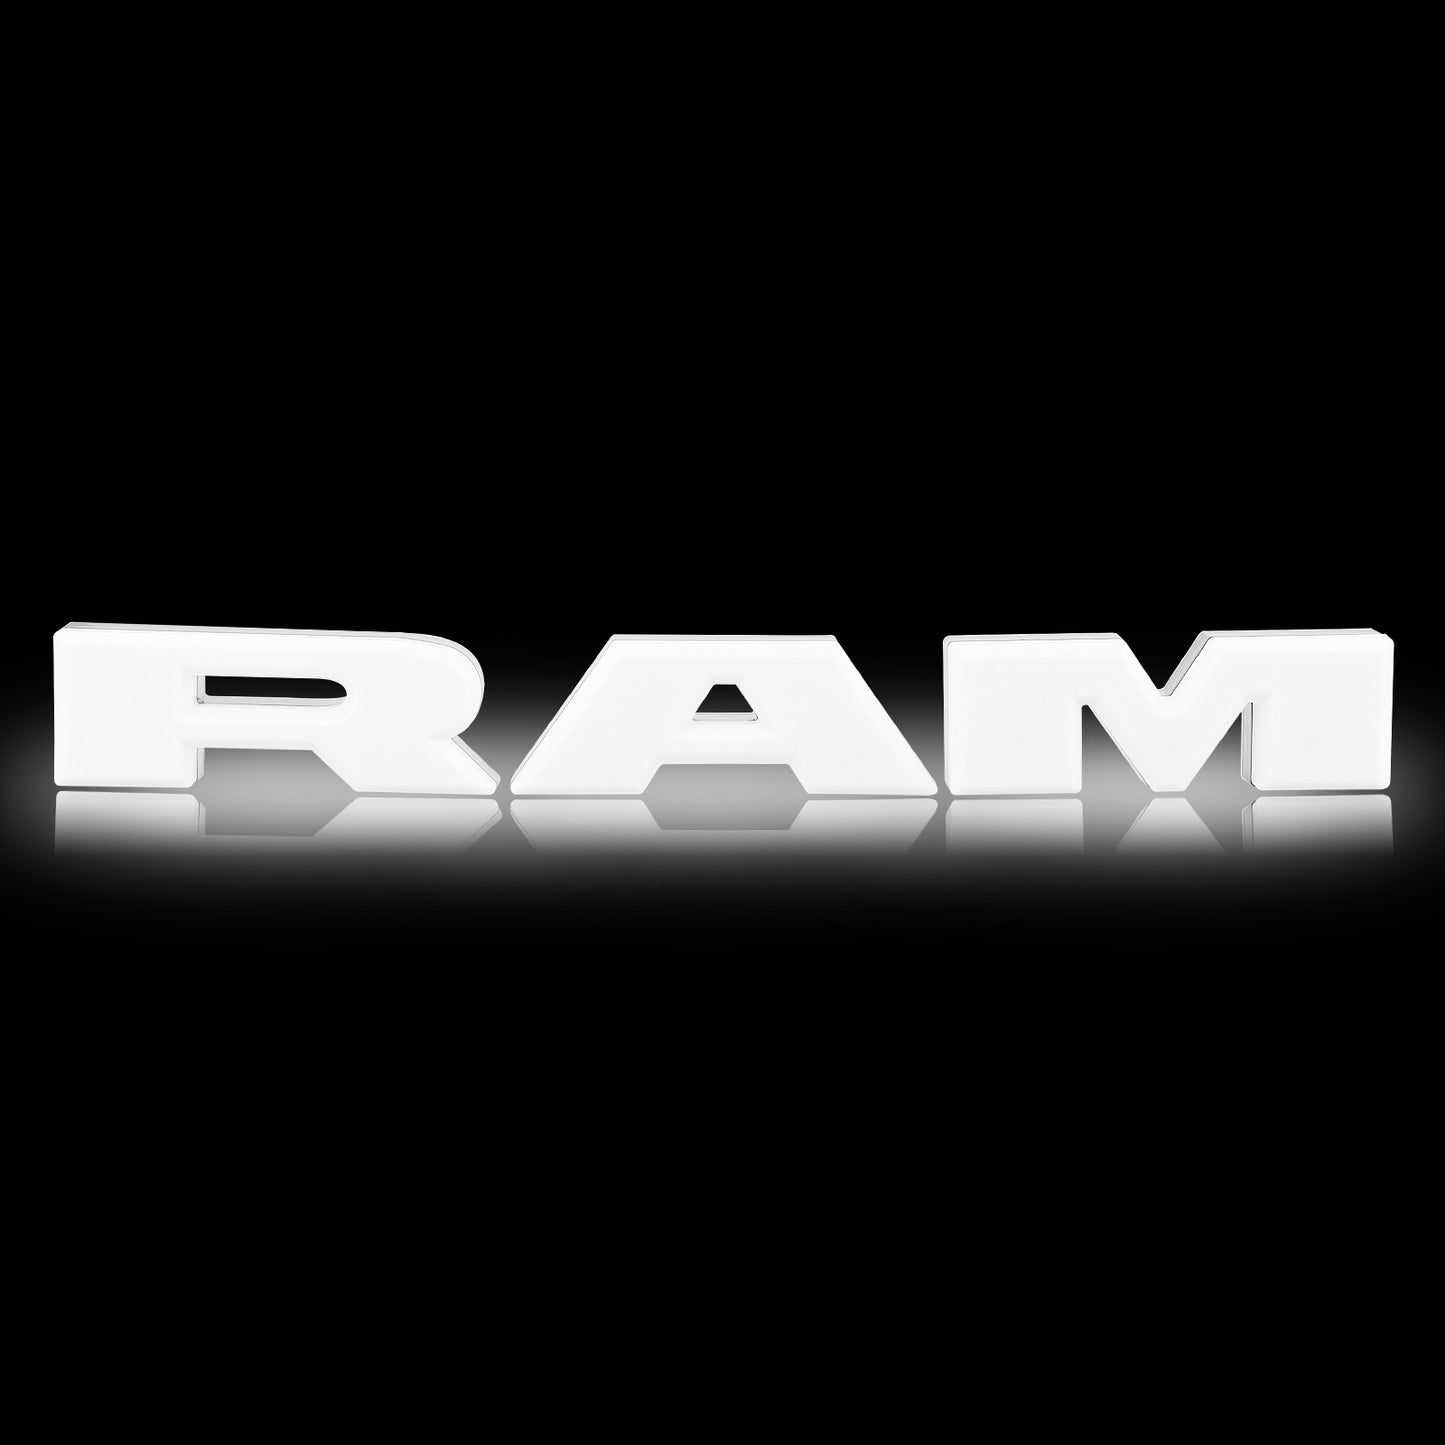 MAD BABOON RAM Letters Led Lights Fit for Dodge Ram 1500 2500 3500 Front Hood Bumper Grille